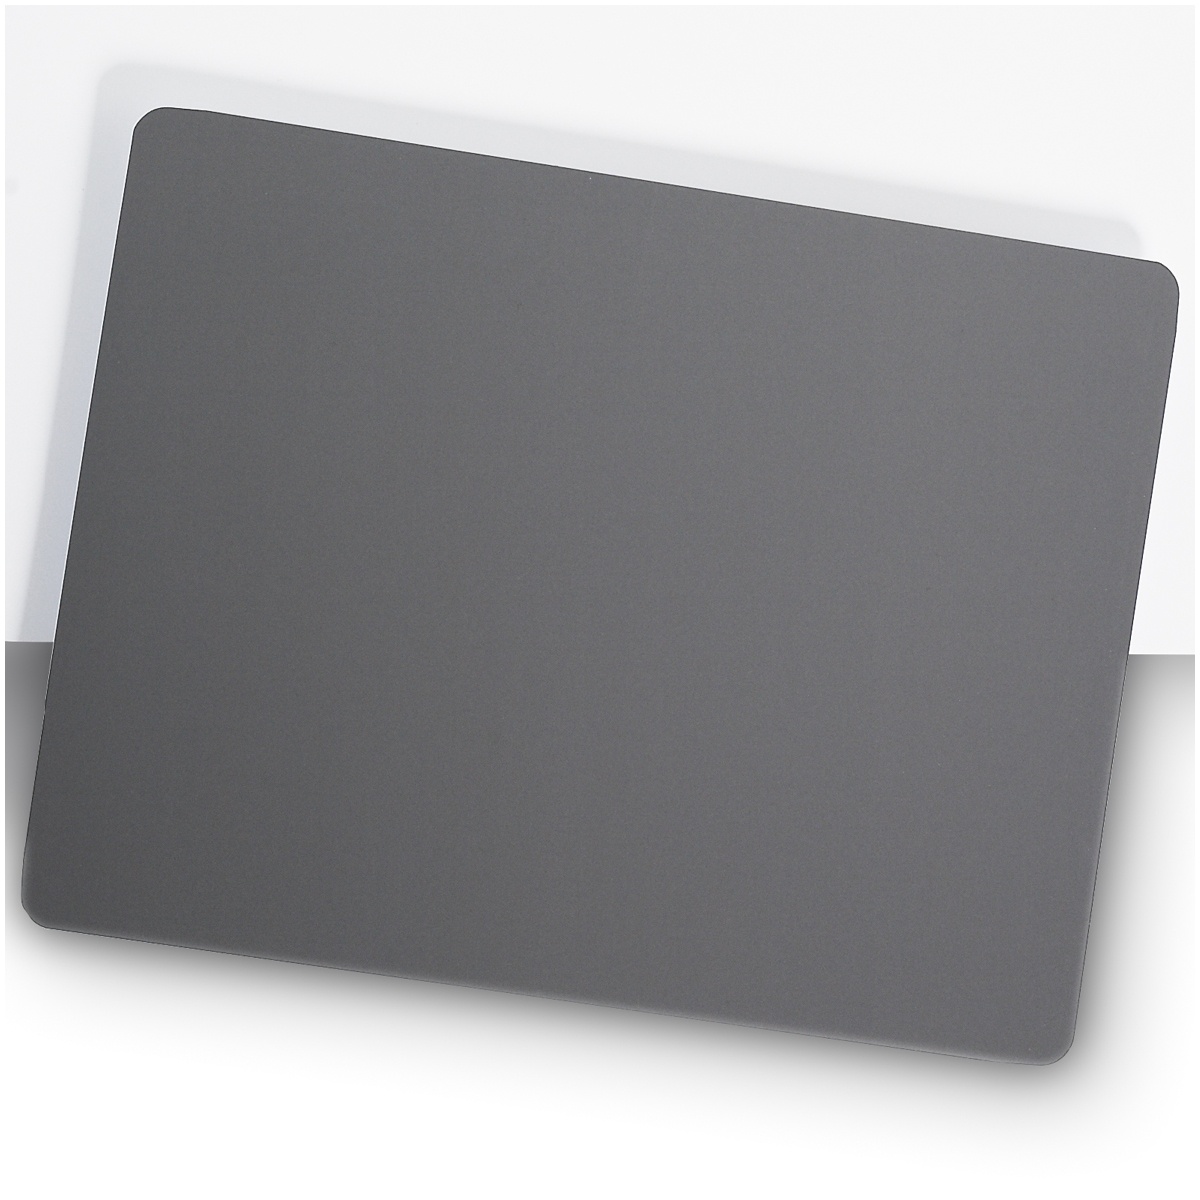 Novoflex Kontrollkarte Grau/Weiß 20x15 cm